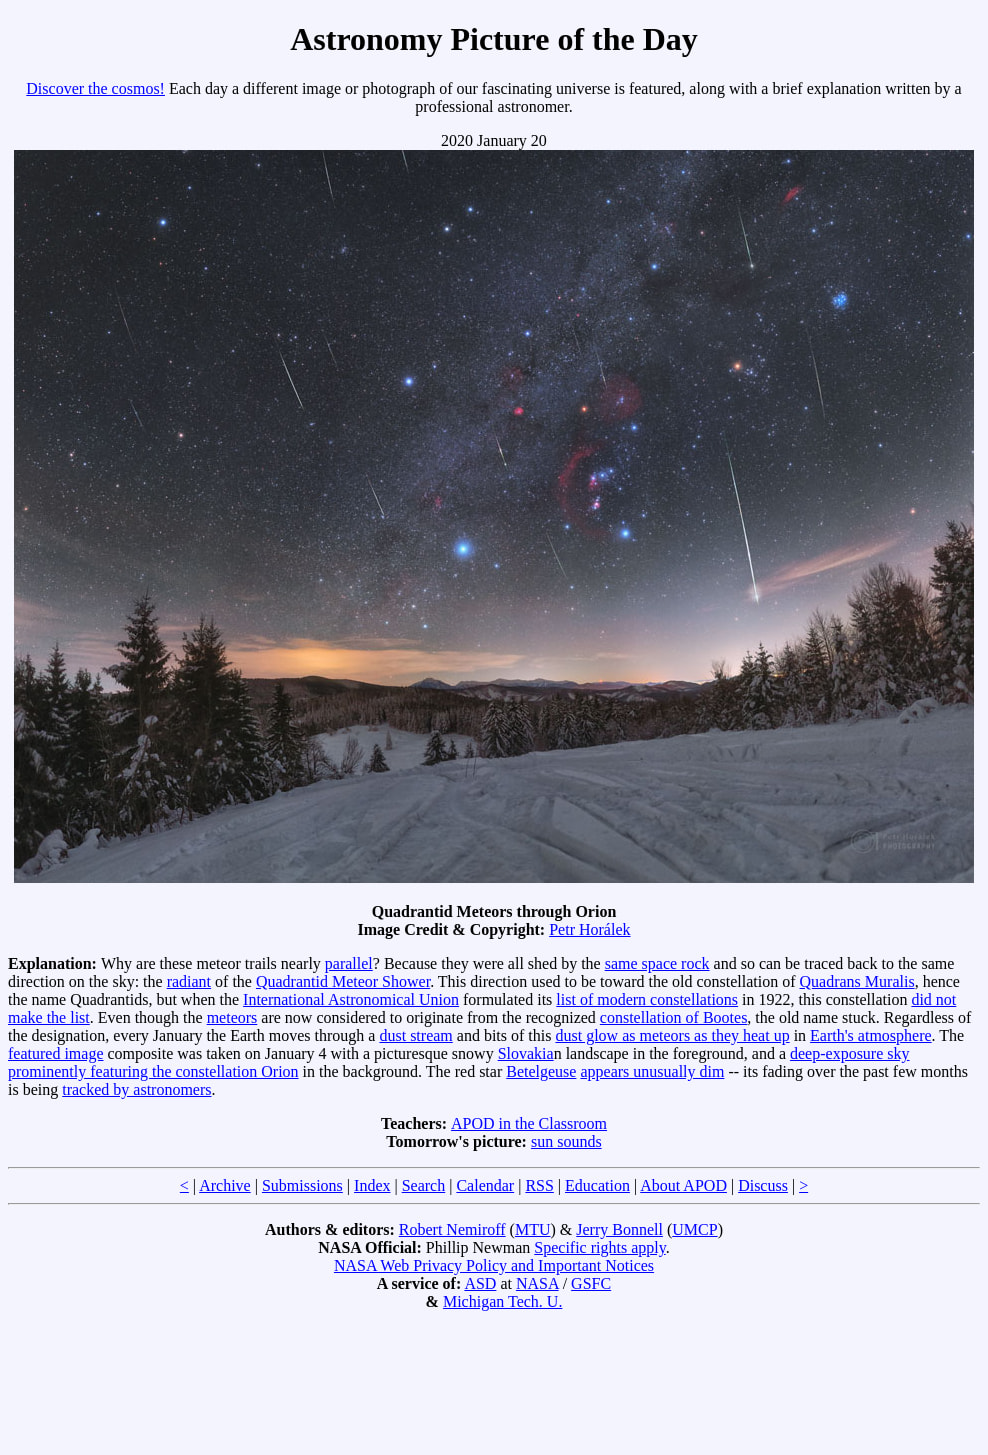 APOD: 2020 January 20 - Quadrantid Meteors through Orion